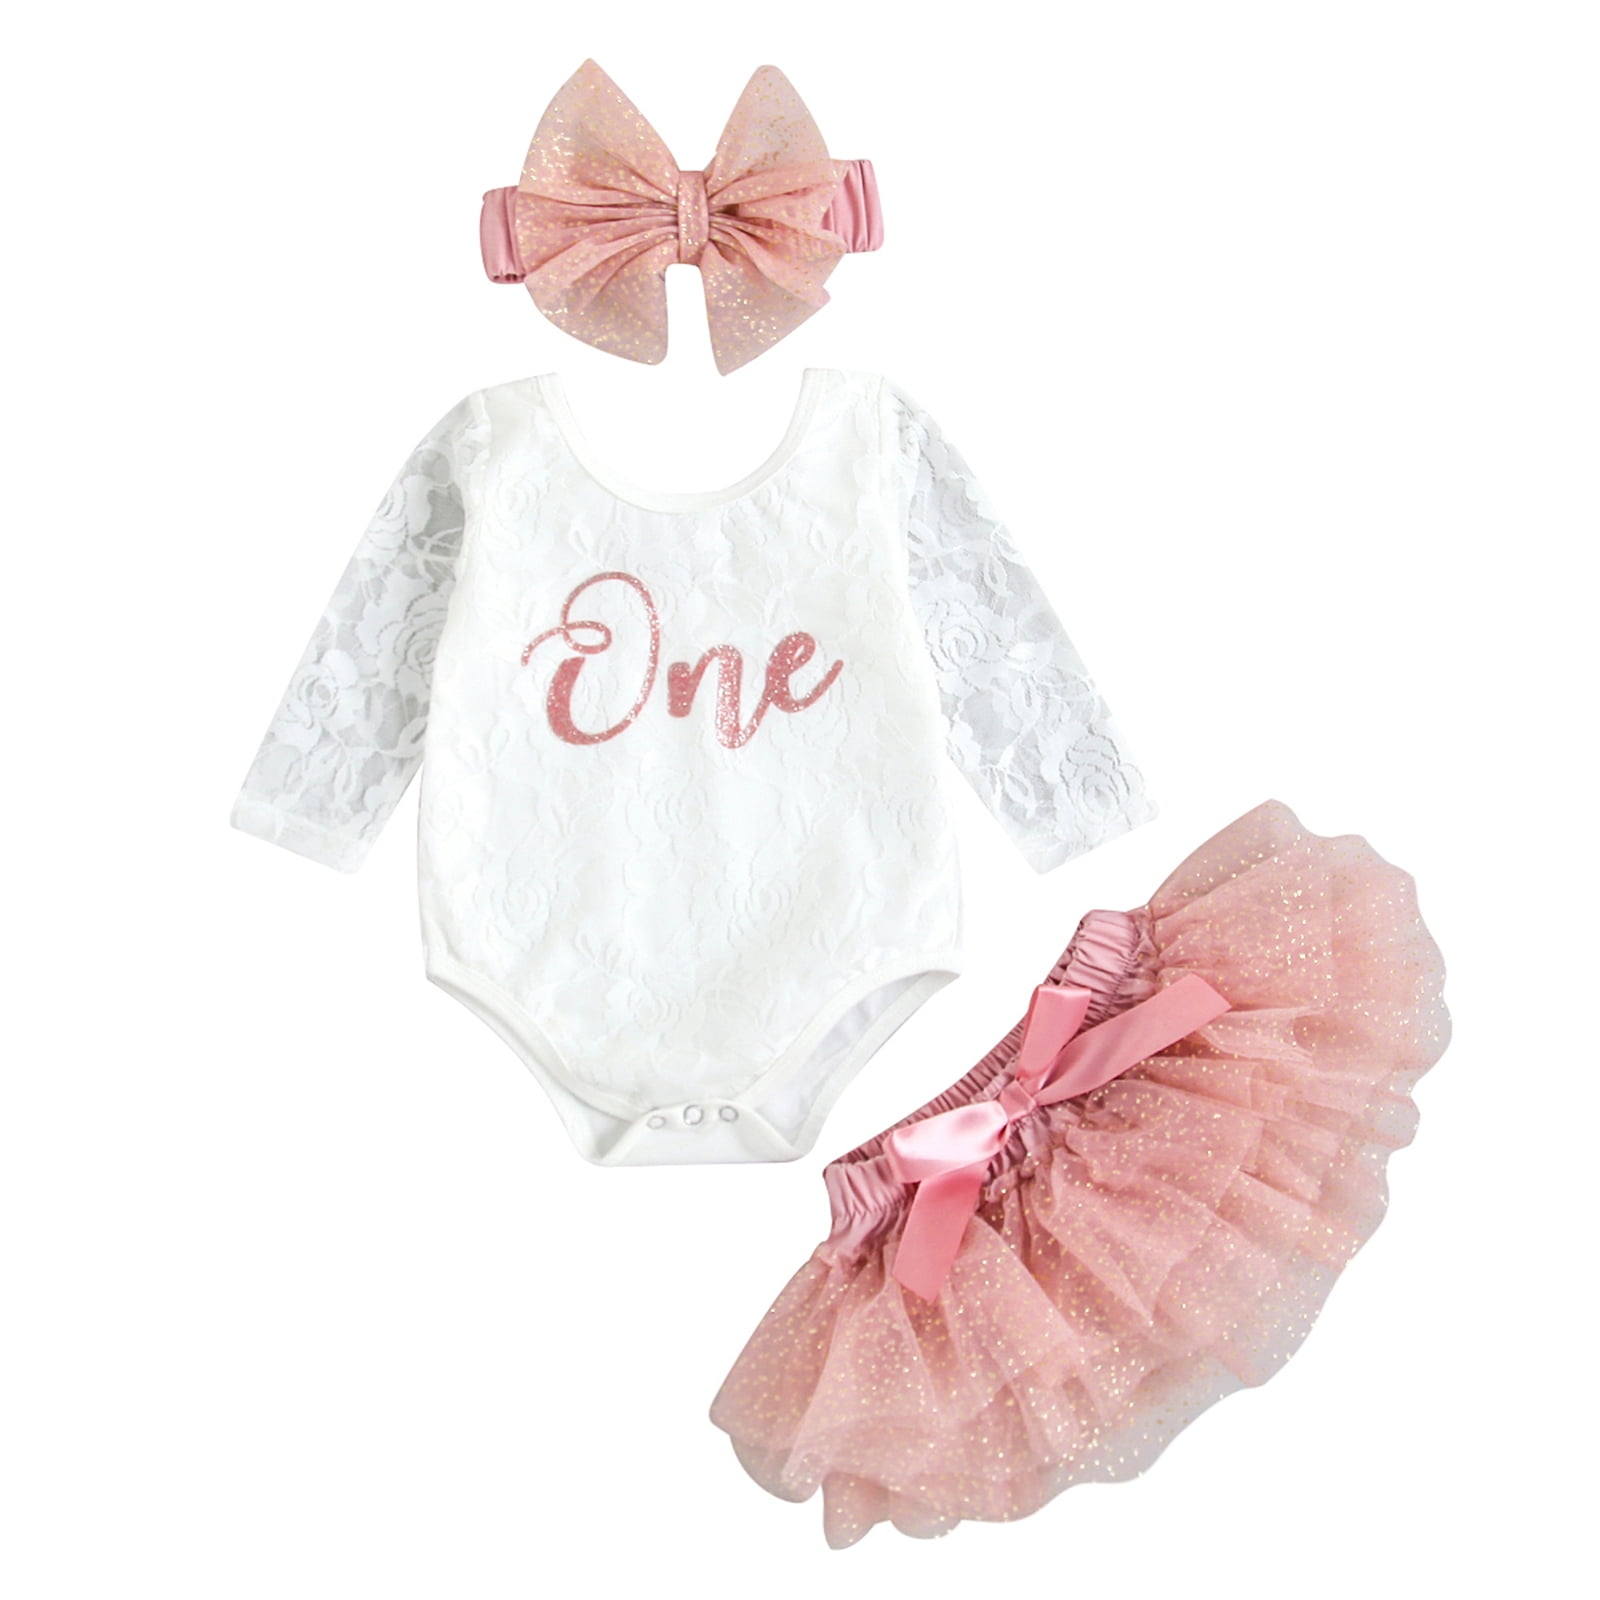 Infant Newborn Baby Girls Short Sleeve Floral Romper Tops Elastic Tutu Skirt Casual Summer Outfit Skirt Sets